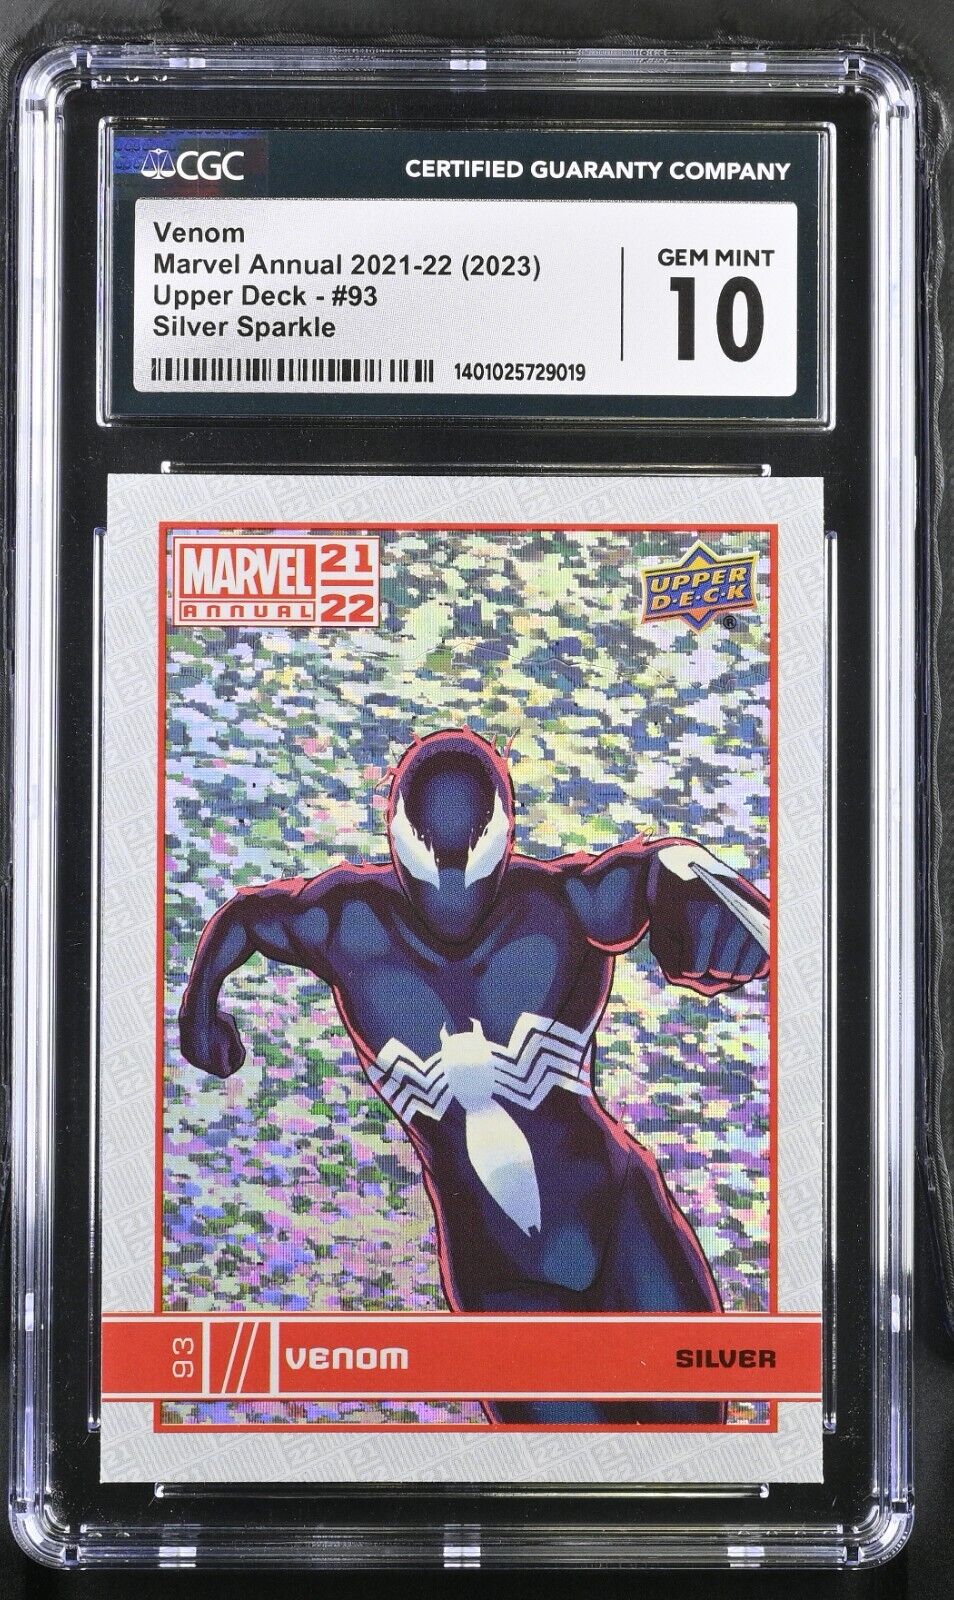 2021-22 Marvel Annual Venom 93 Silver Sparkle CGC Gem Mint 10